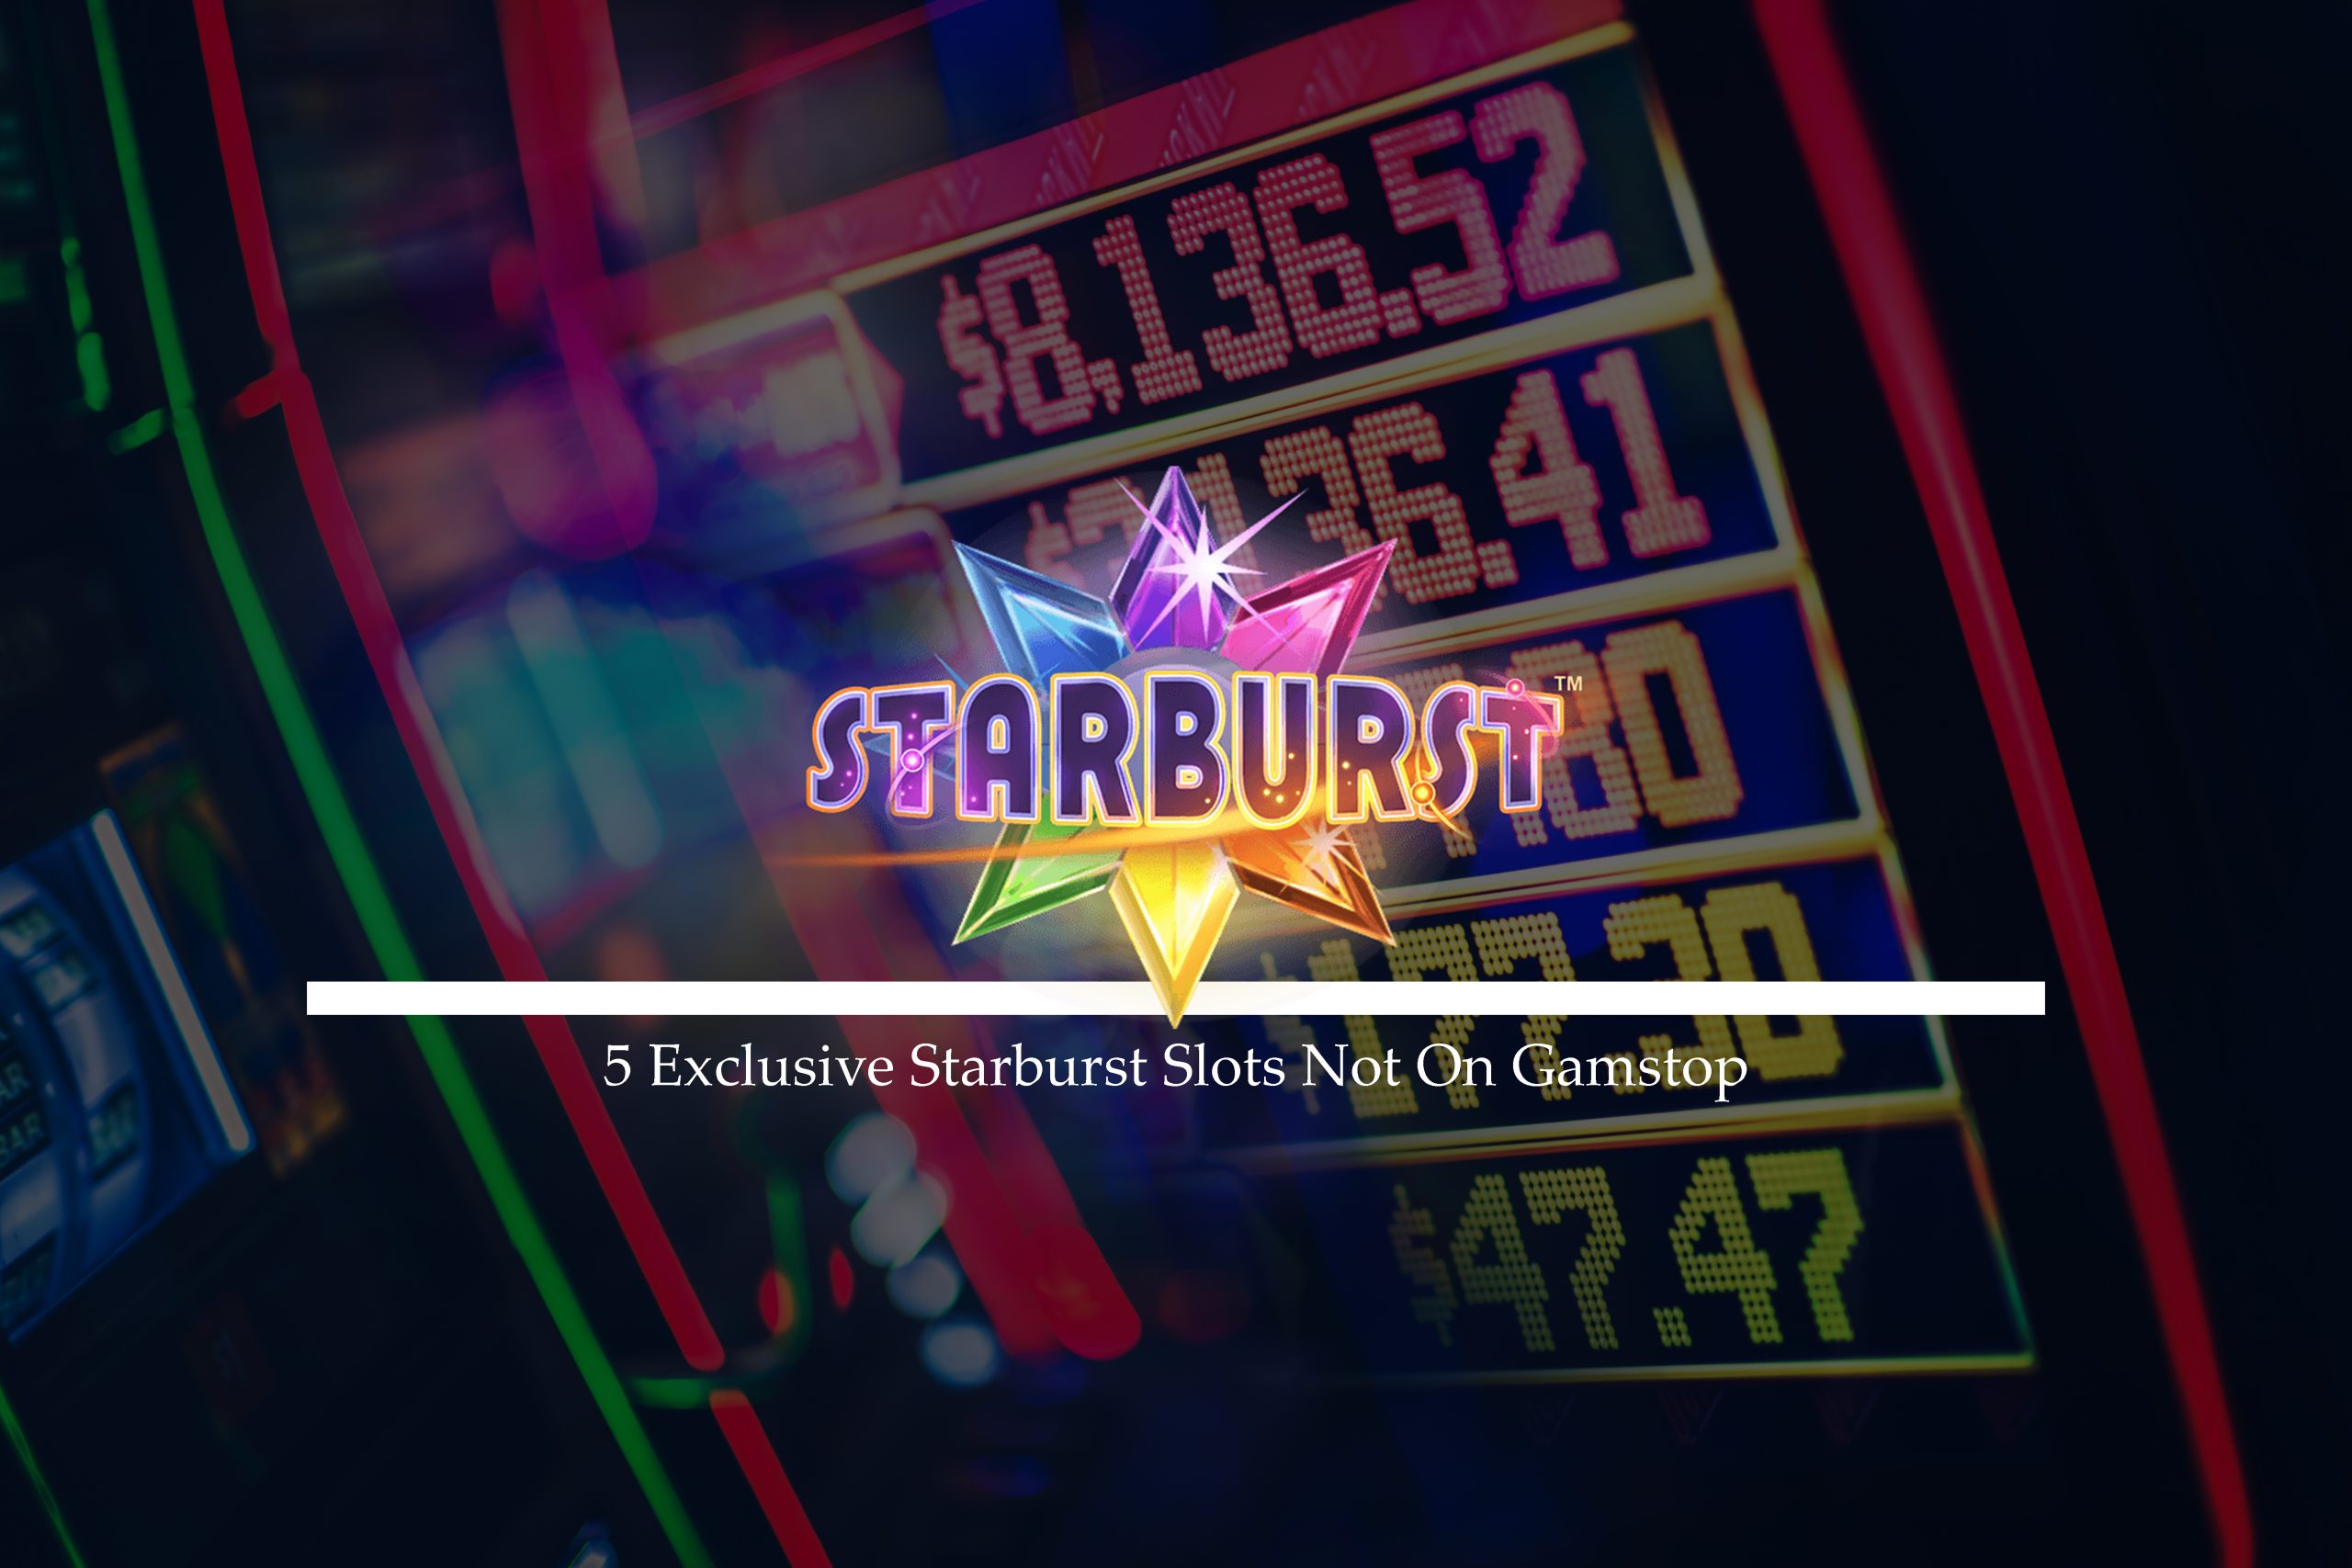 5 Exclusive Starburst Slots Not On Gamstop